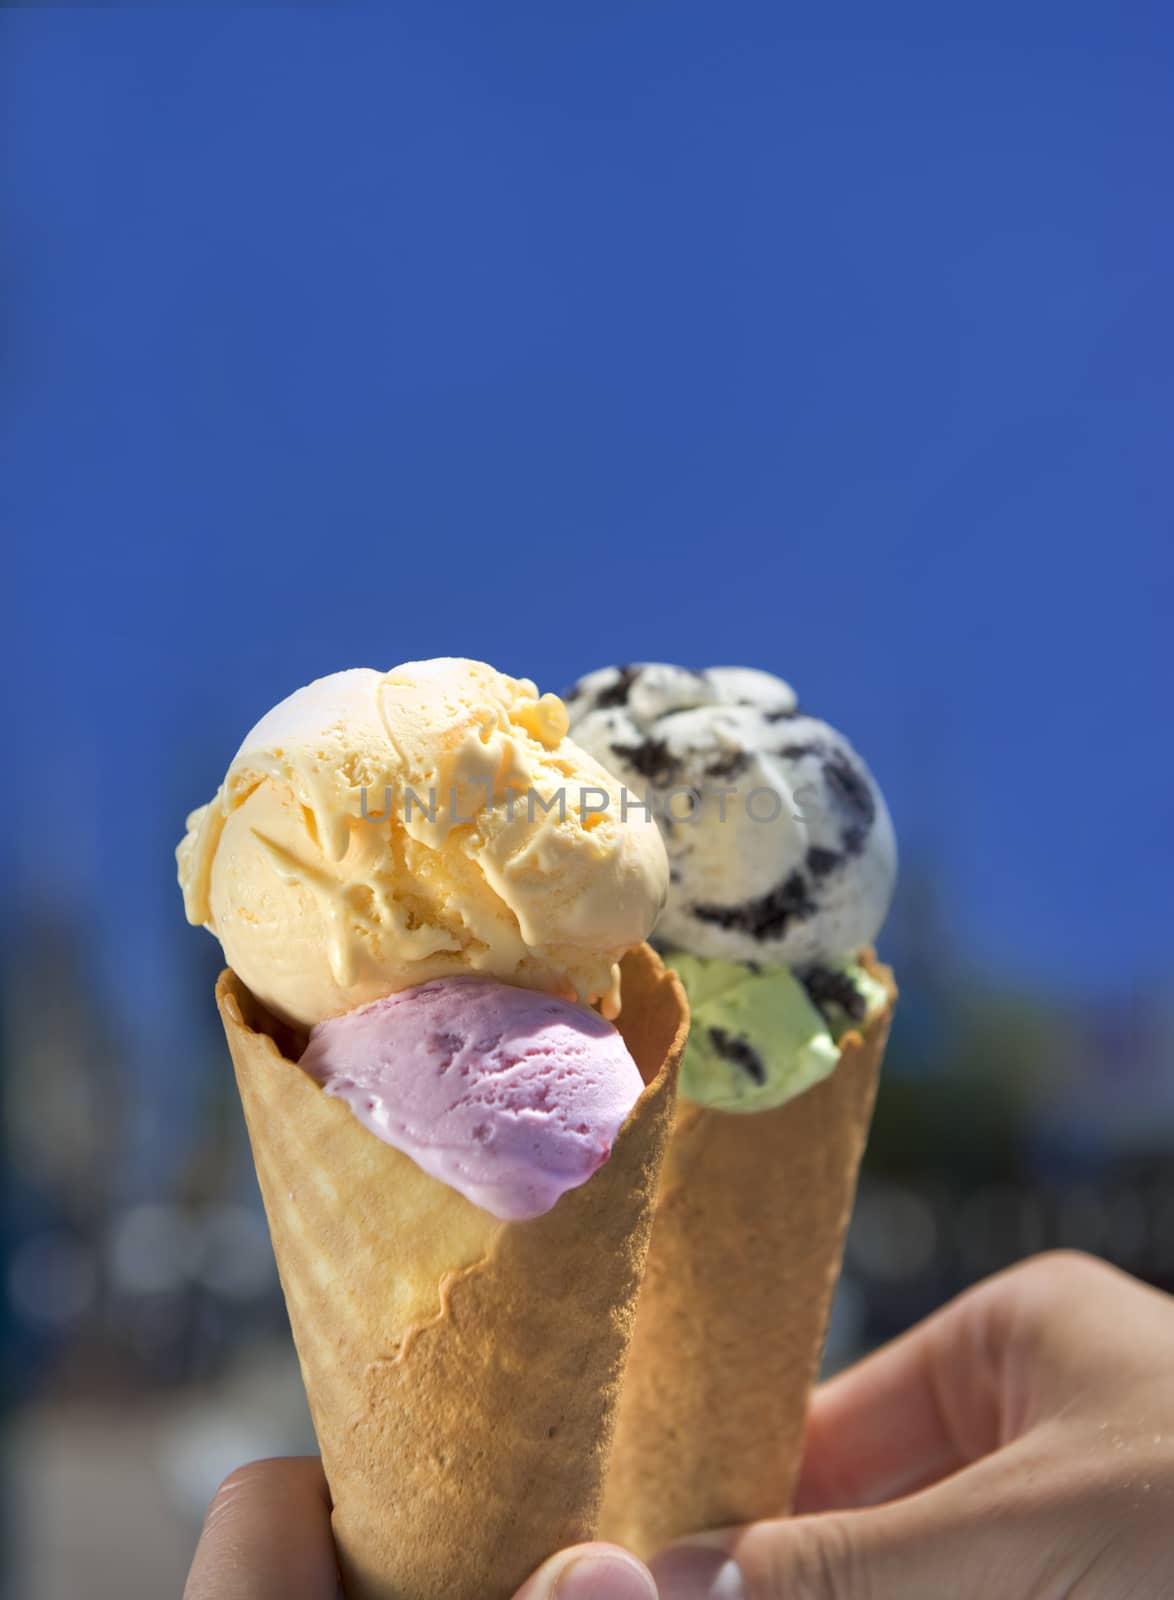 Delicious vivid colored home made ice cream in a waffle cone